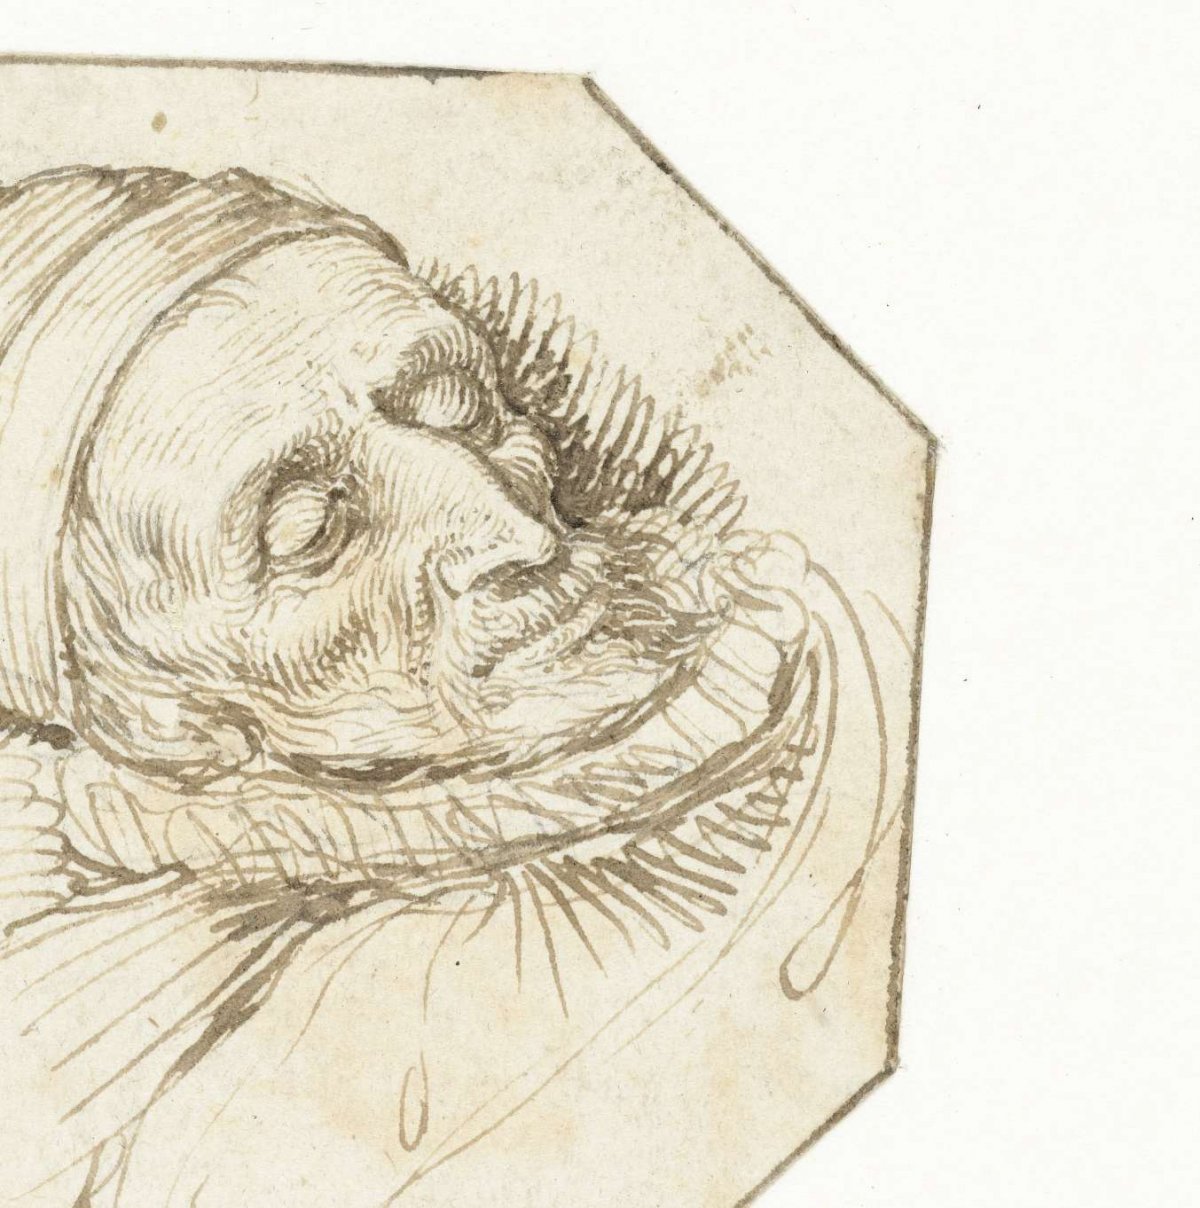 Portrait of a man on his deathbed, Jacques de Gheyn (II), 1575 - 1625